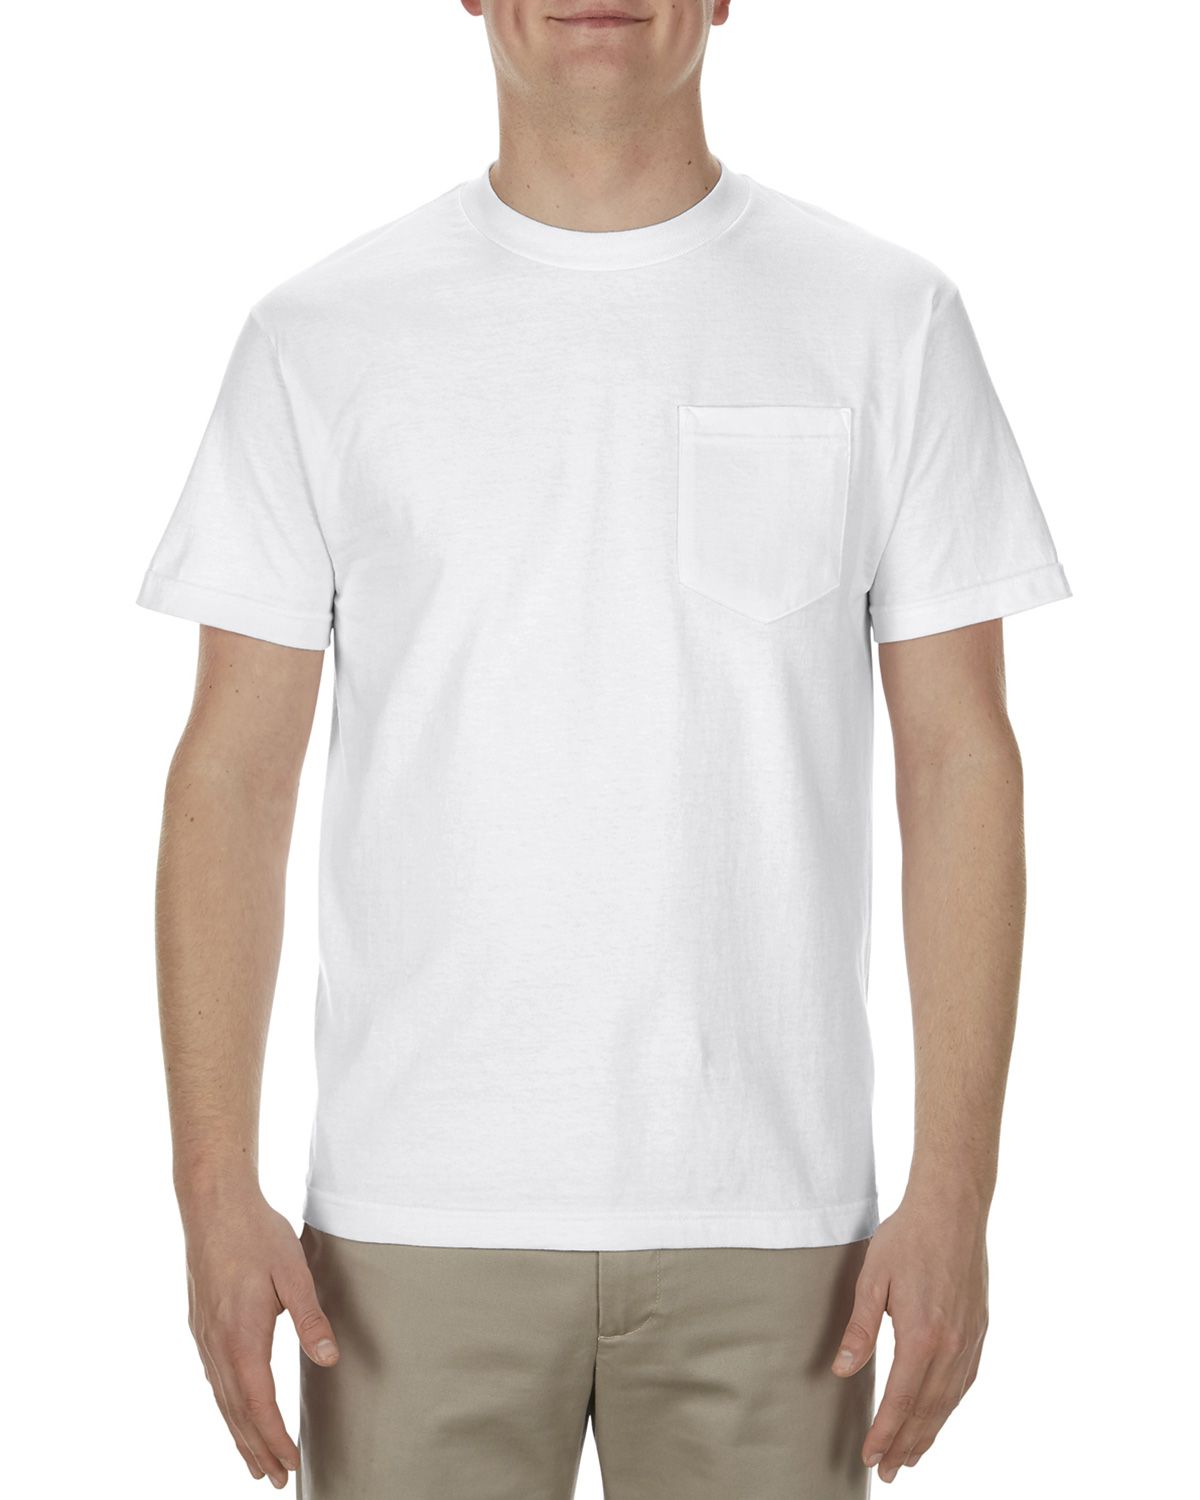 Alstyle AL1905 Men's 5.1 oz. 100% Soft Spun Cotton Pocket T-Shirt